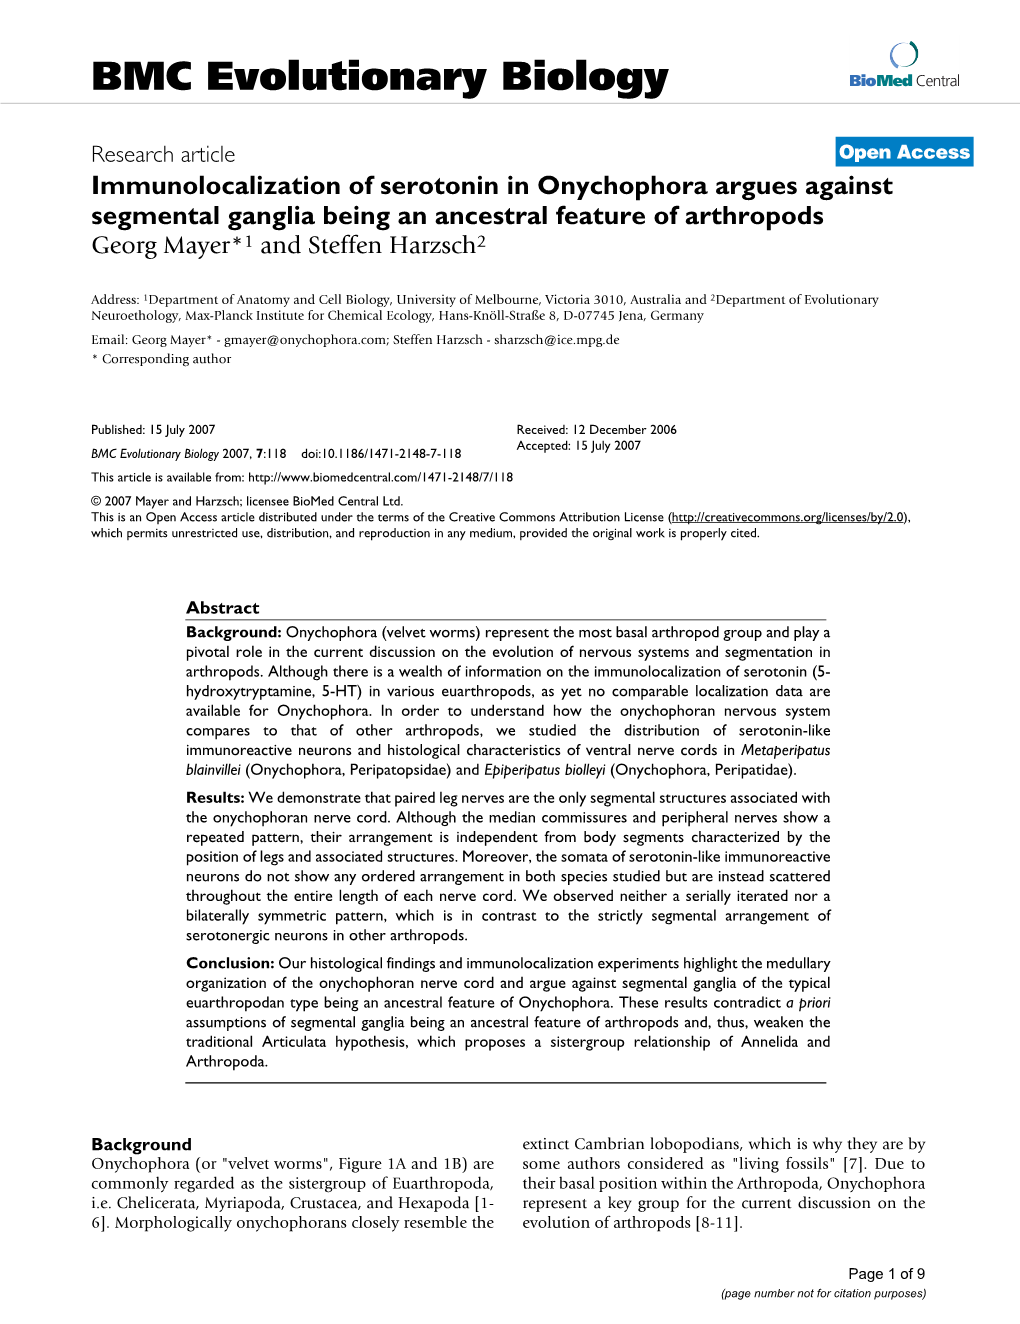 Immunolocalization of Serotonin in Onychophora Argues Against Segmental Ganglia Being an Ancestral Feature of Arthropods Georg Mayer*1 and Steffen Harzsch2